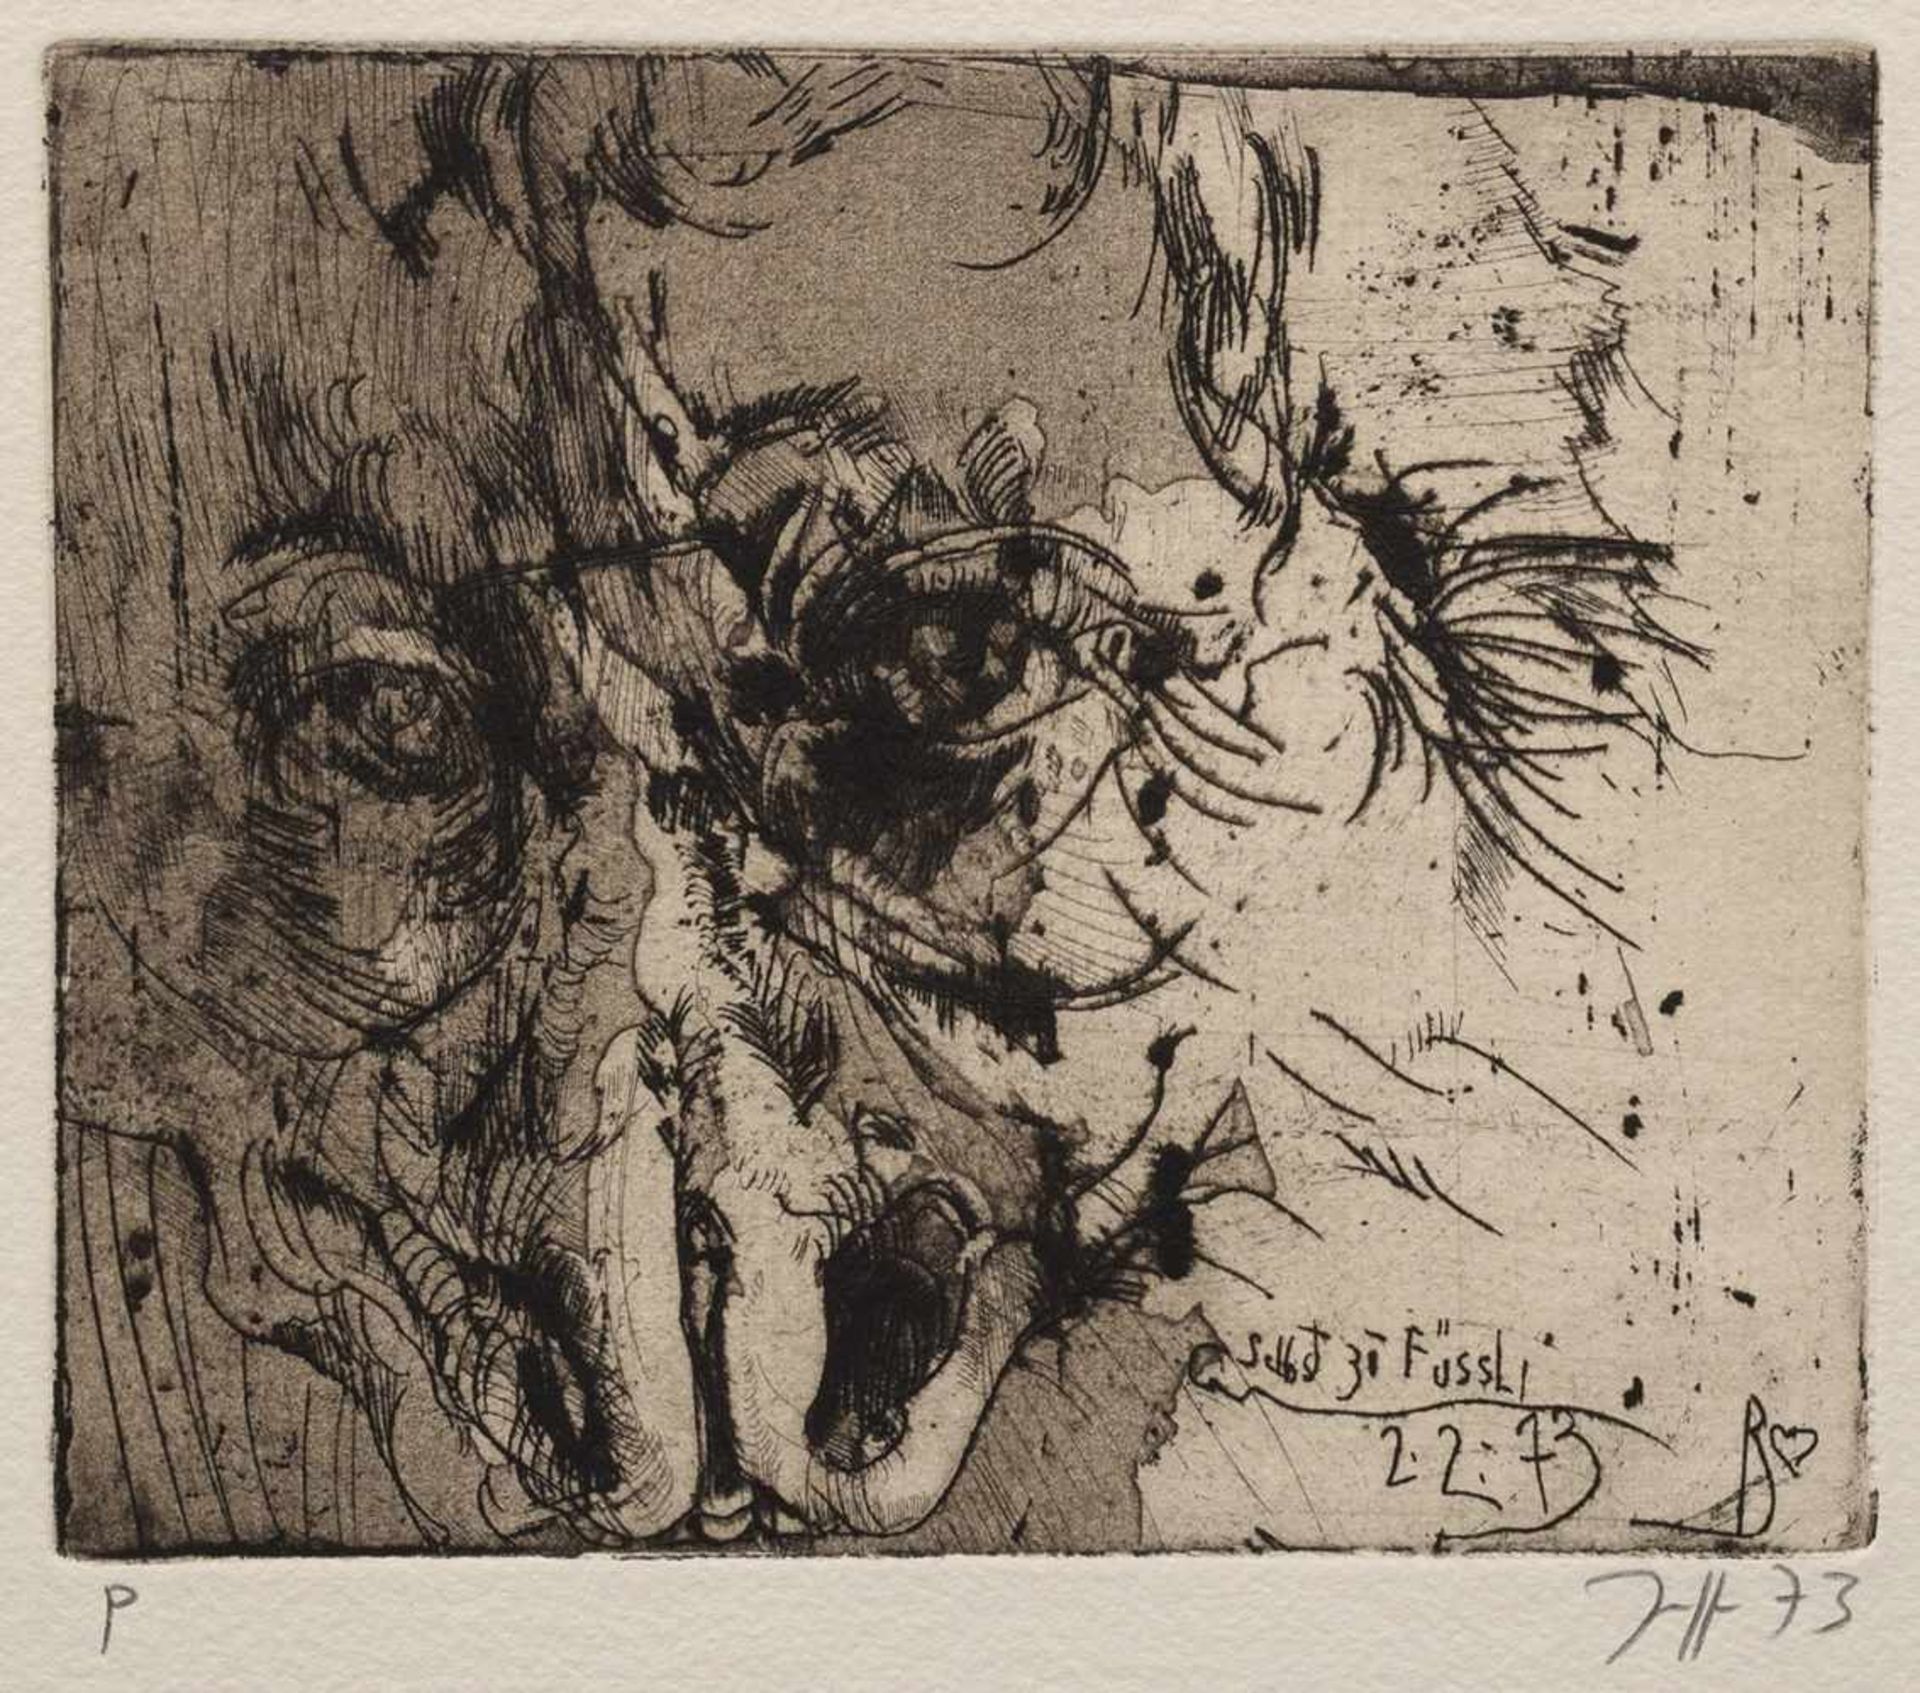 Janssen, Horst (1929-1995) "Self at Füssli" 2.2.73, drypoint etching, proof print, sign./dat. l.r.